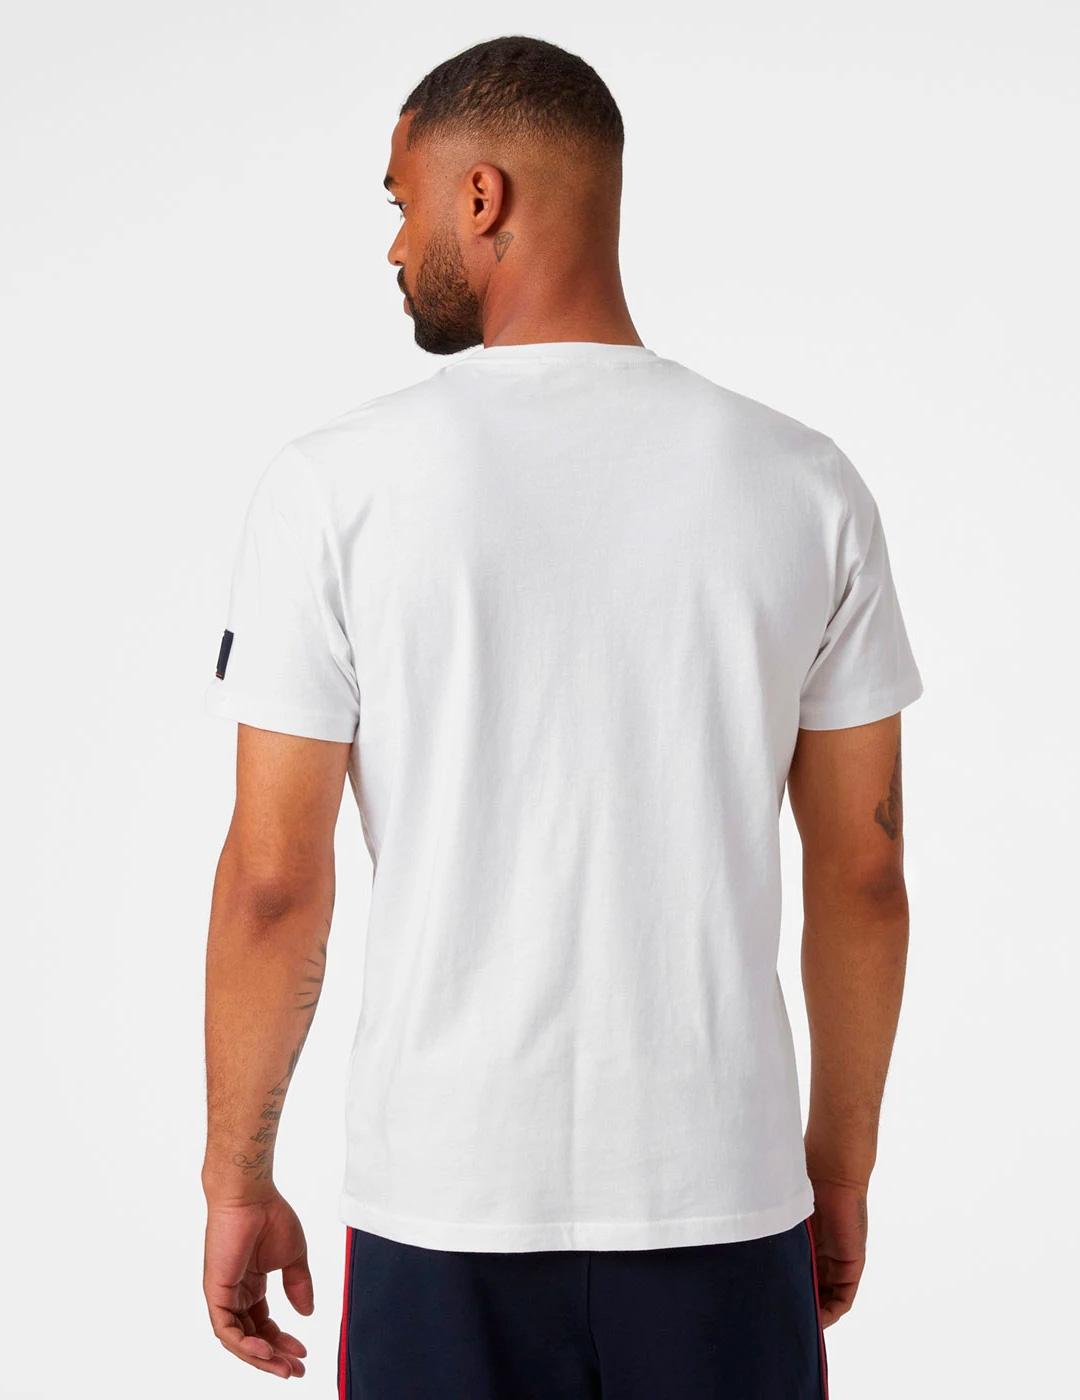 Camisetas Helly Hansen 'Rwb Graphic' Blanco